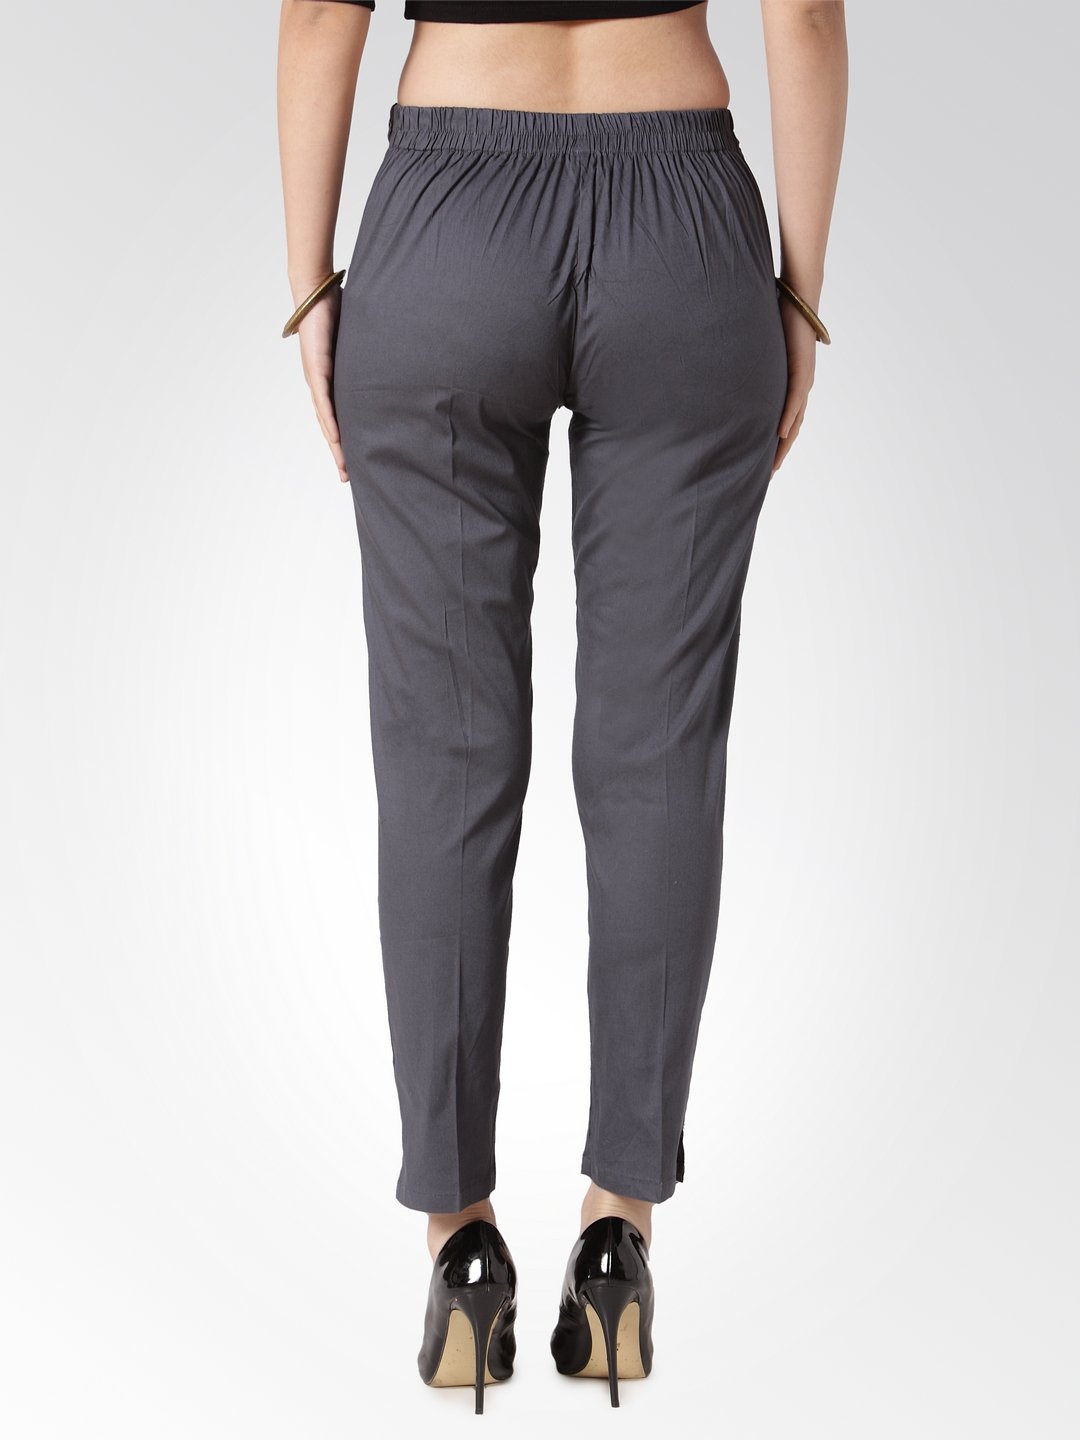 Women's Grey Smart Slim Fit Solid Regular Trousers - Jompers